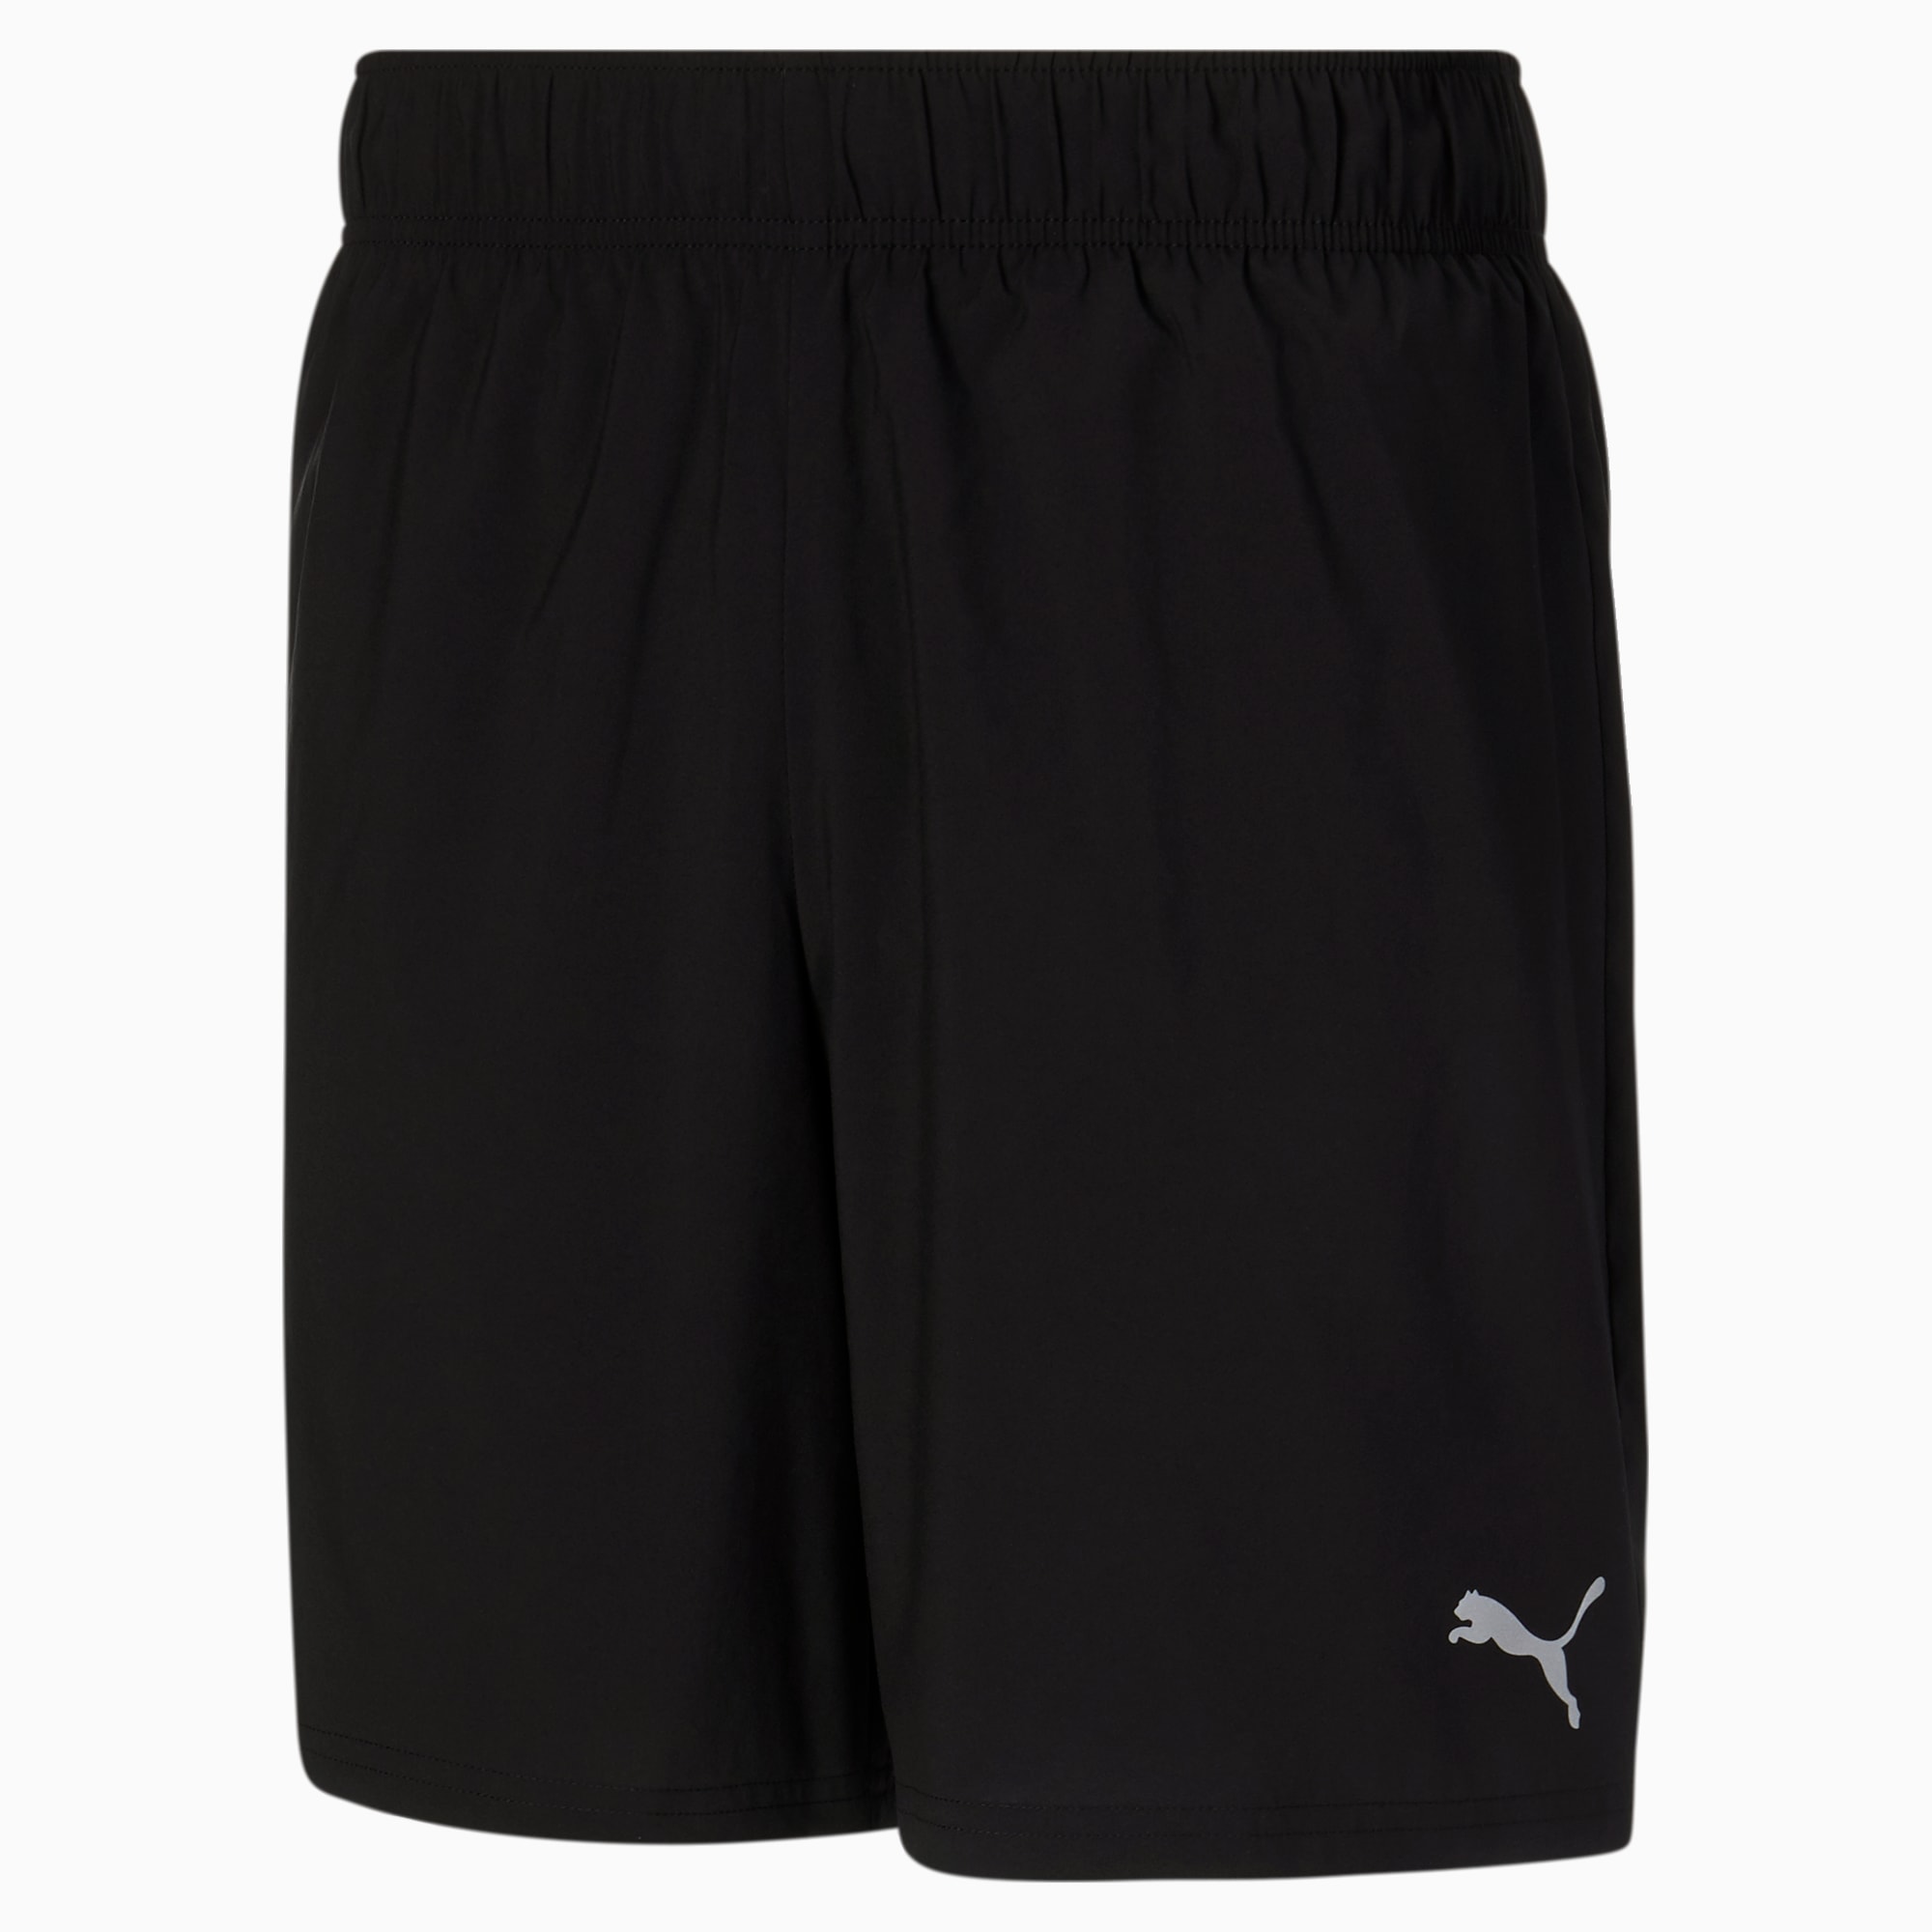 PUMA Favourite 2-in-1 Men's Running Shorts, Black, Size XL, Clothing